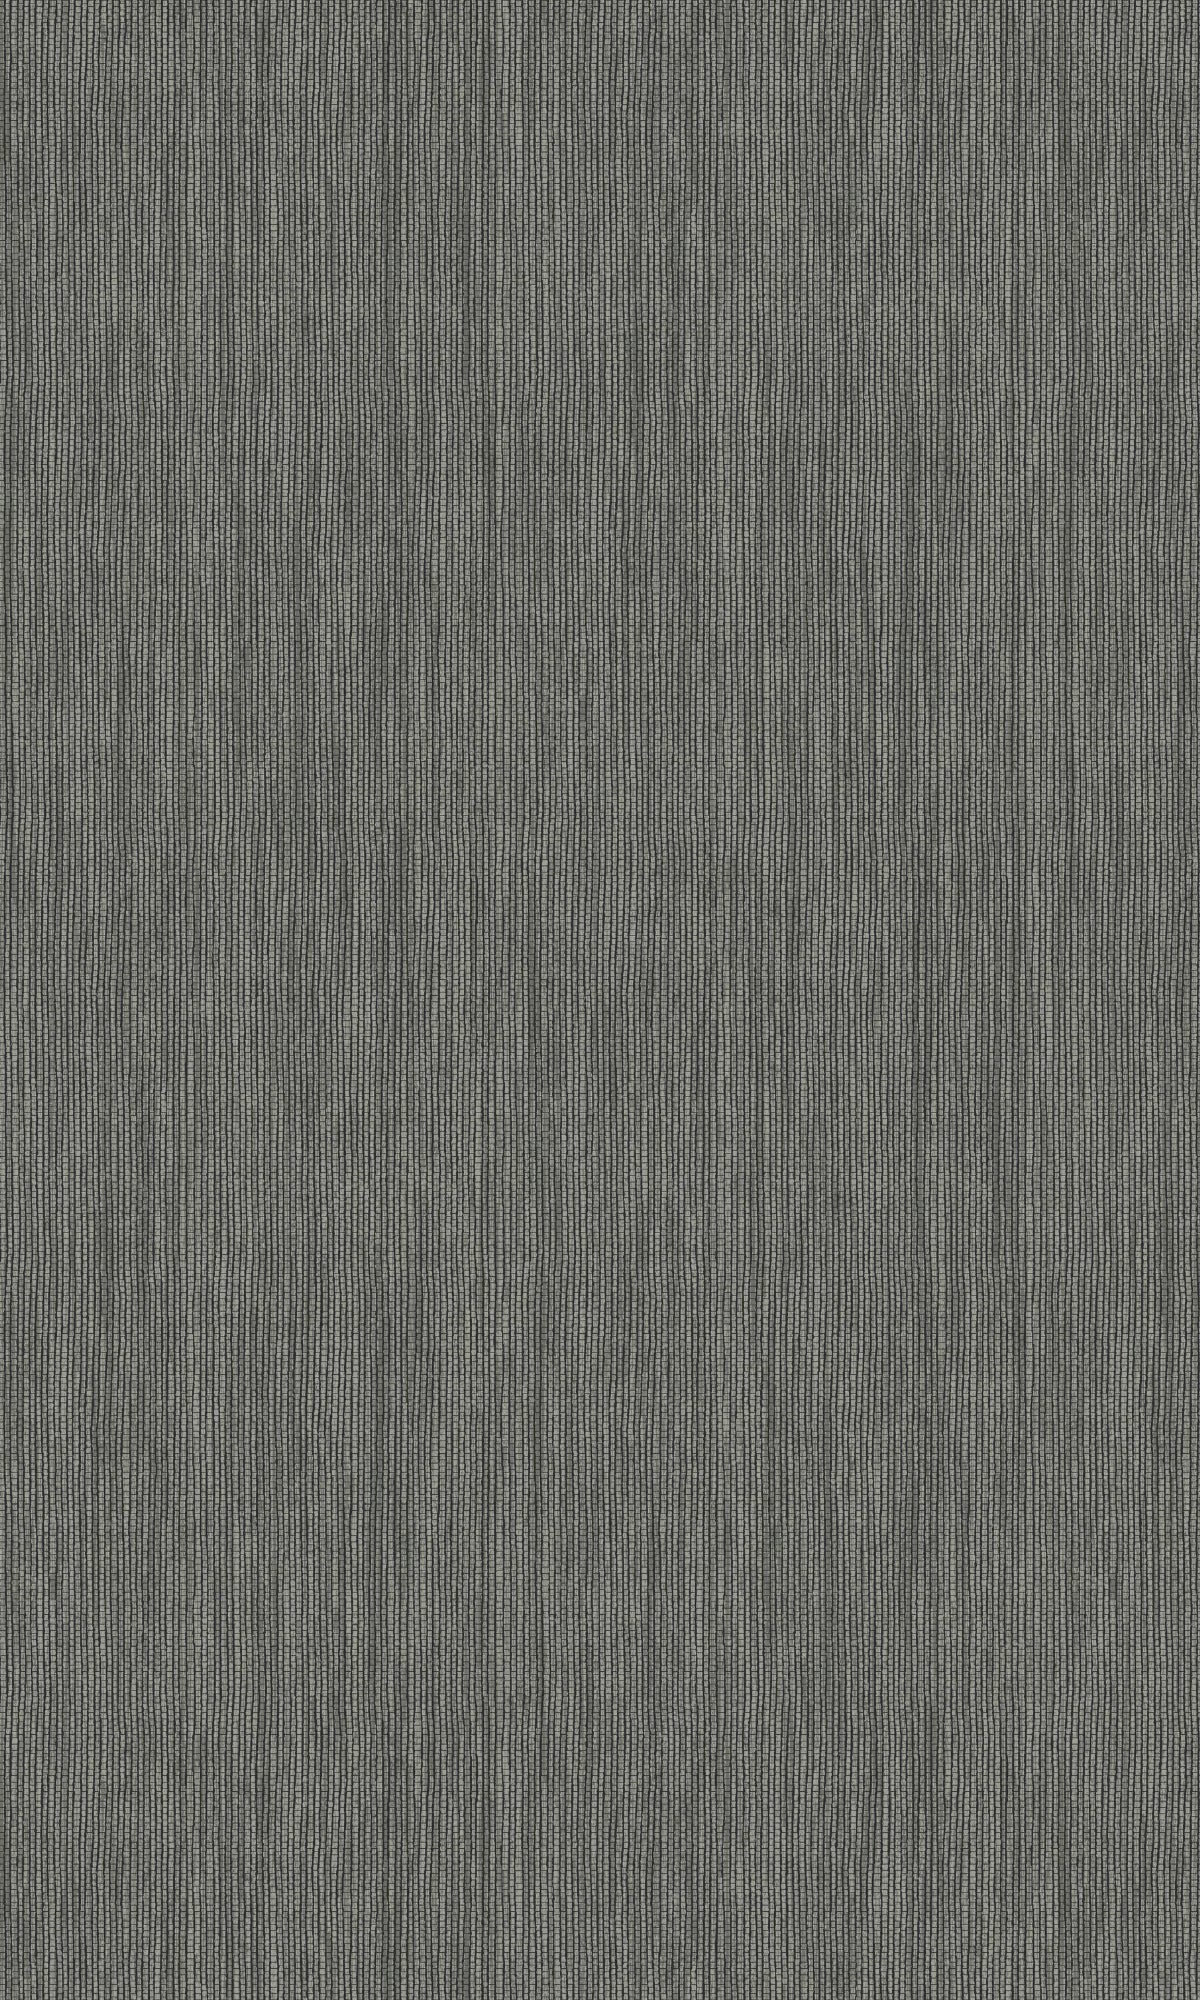 Black Plain Textile Textured Wallpaper R9076